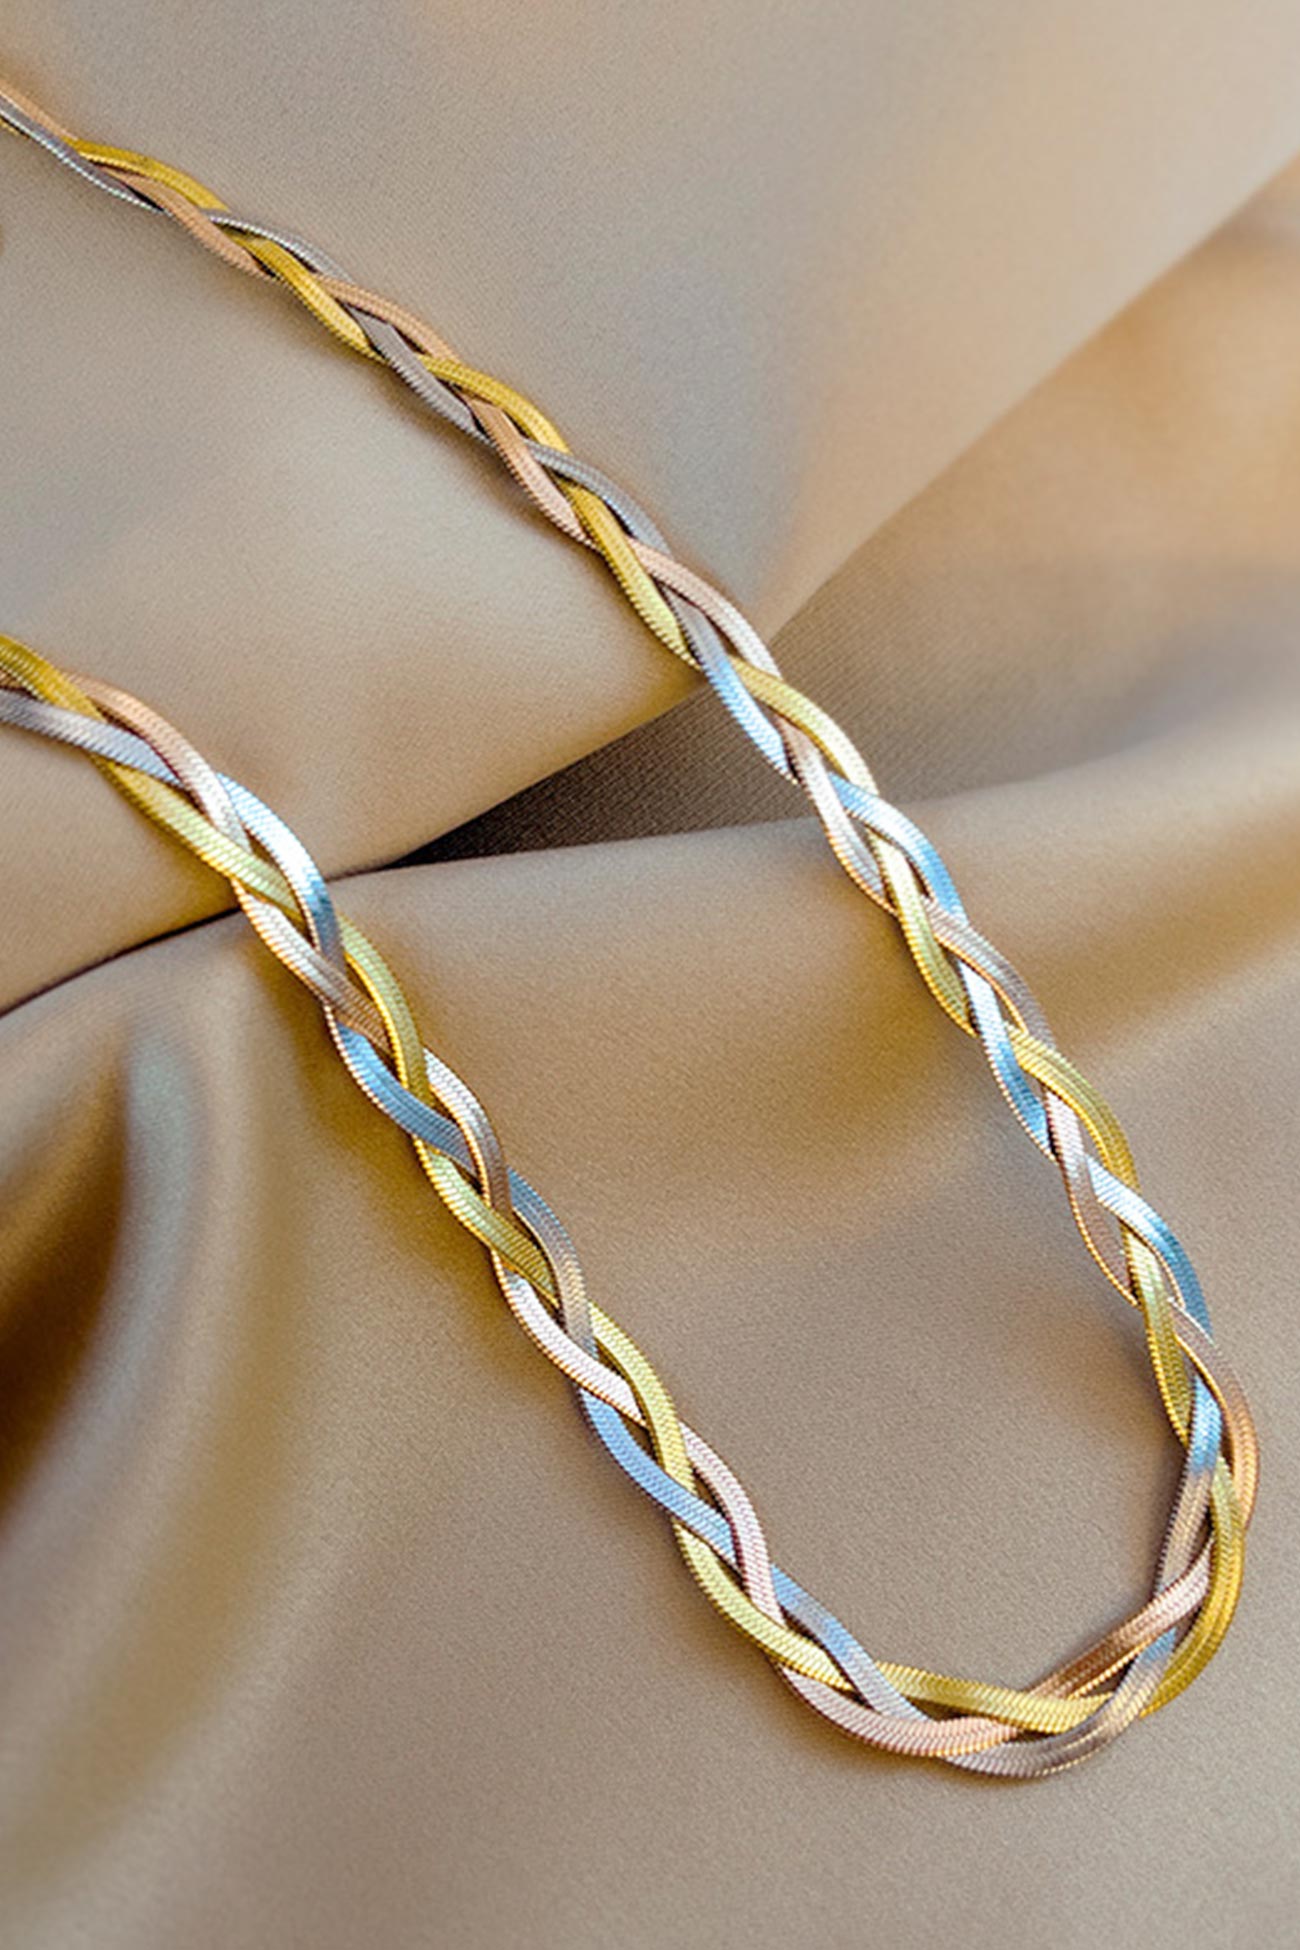 Flytonn-Valentine's Day gift Three Layer Braided Necklaces